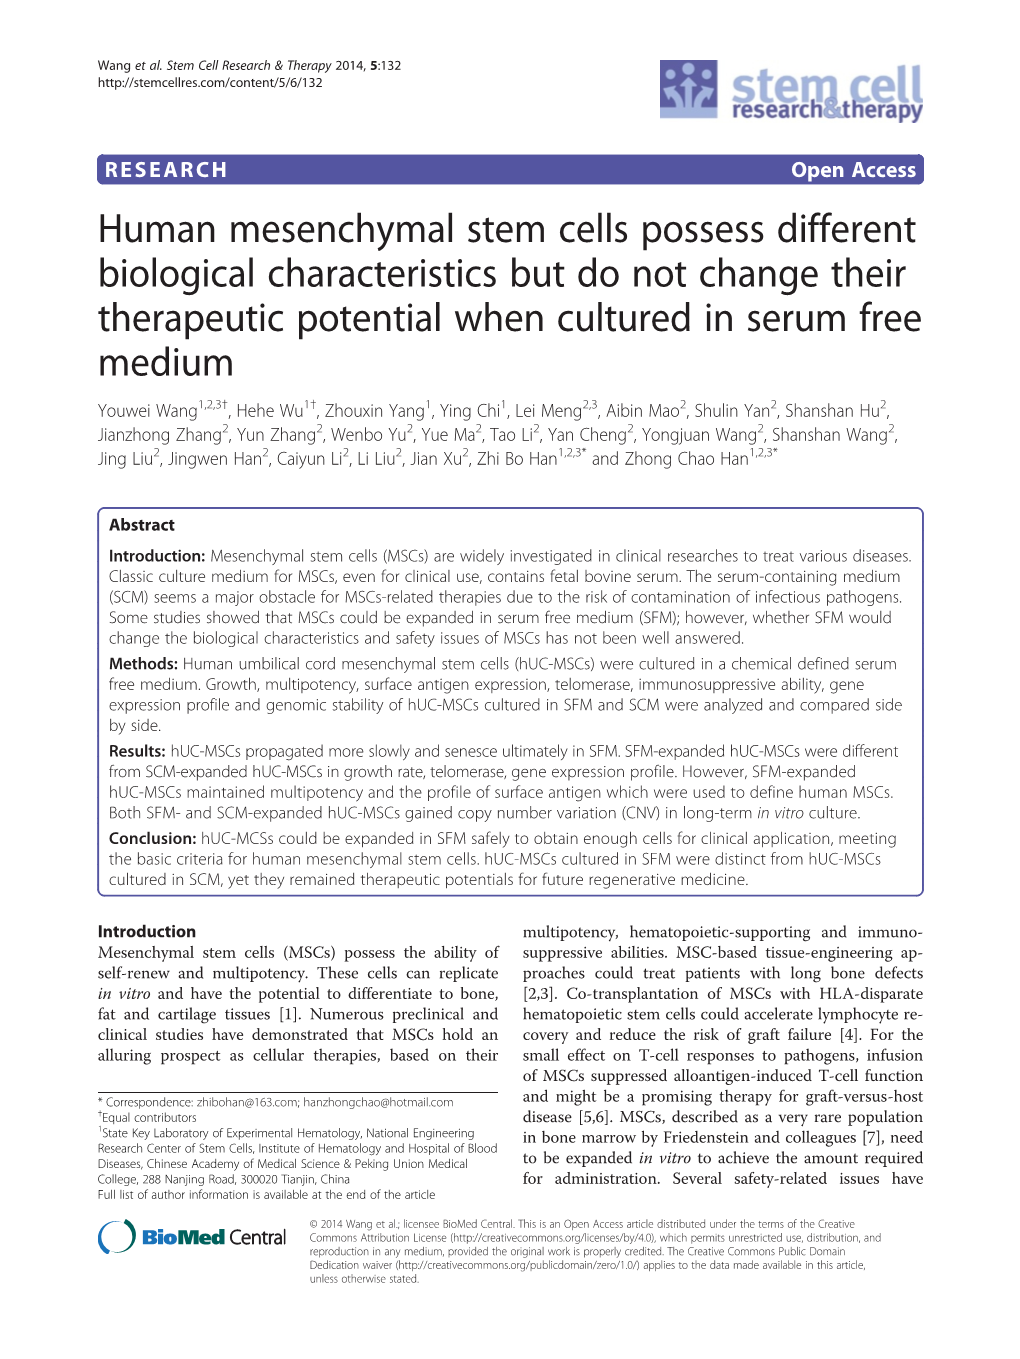 Human Mesenchymal Stem Cells Possess Different Biological